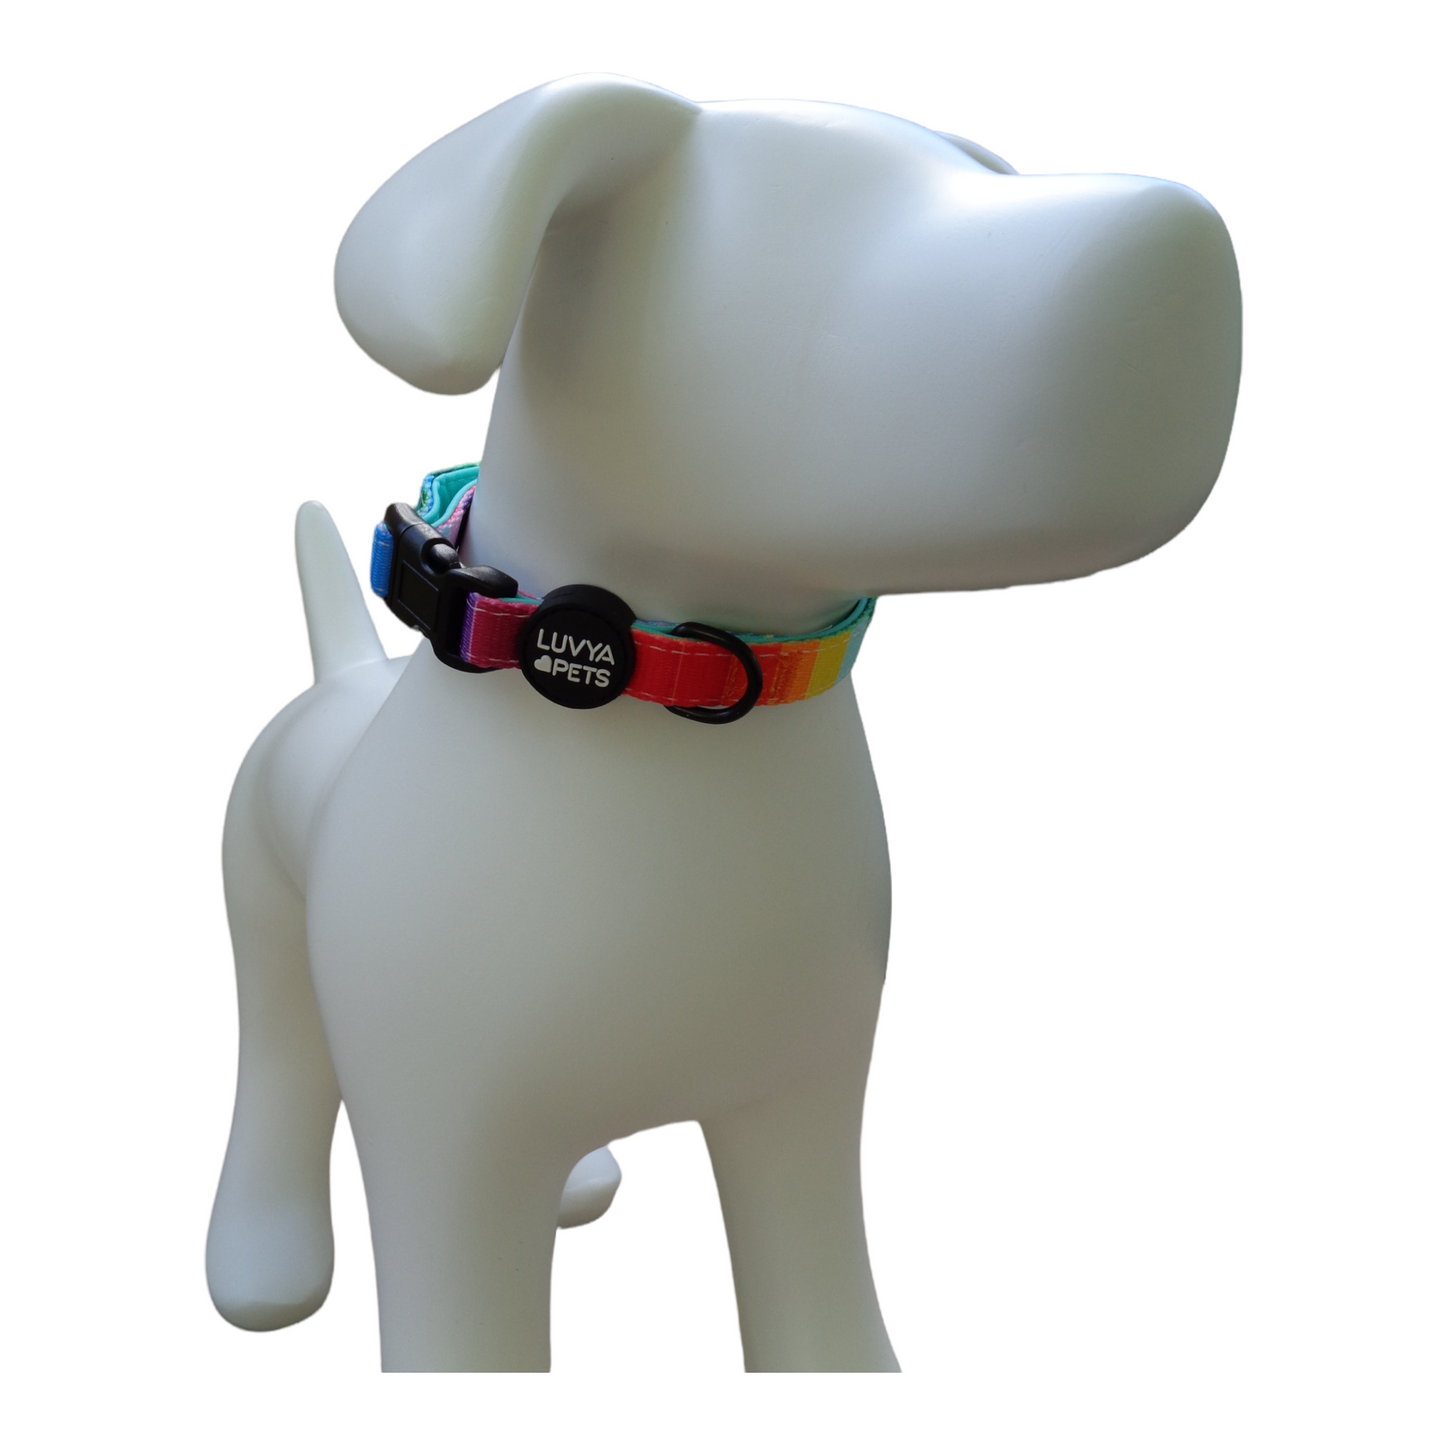 LuvYa Most Rainbow Dog Collar